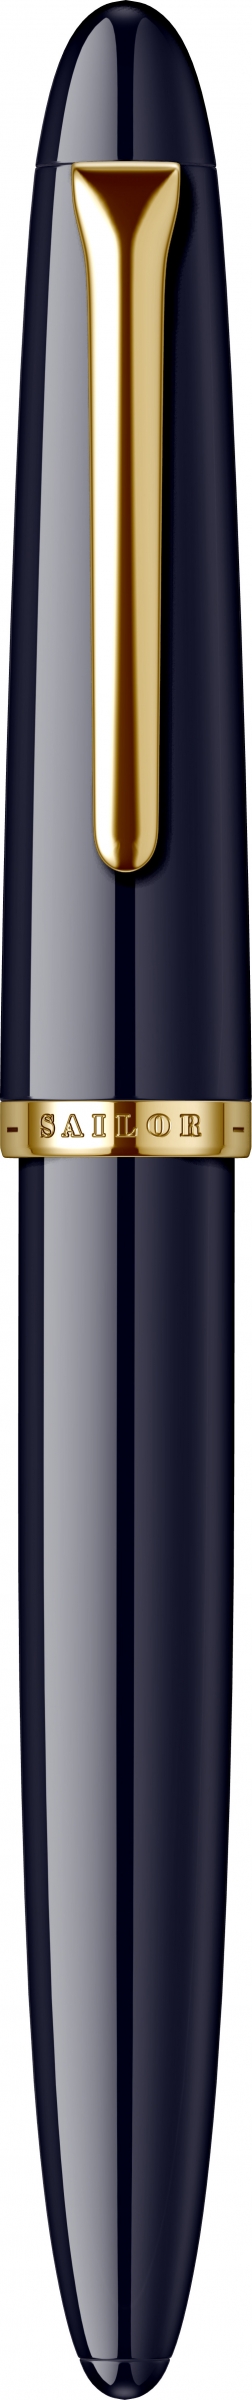 Sailor Romania